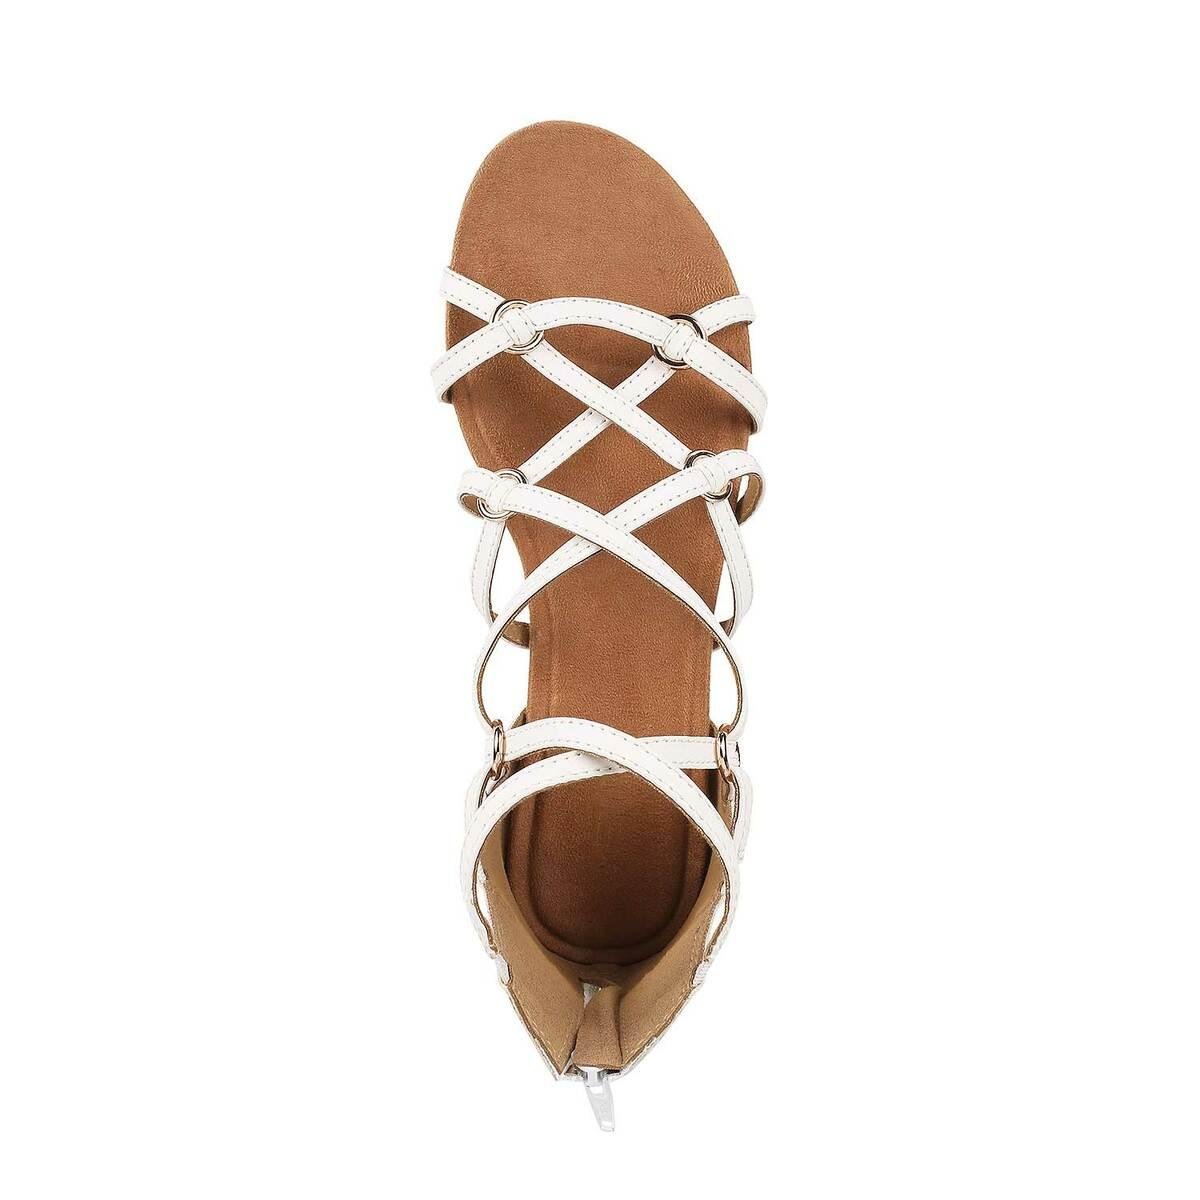 YODEKS Women's Diamond Open Toe Platform High Heels Crisscross Strappy  Sandals Stiletto Gladiator Heel Wedding Bridal Party, Multicolour Gold, 10  : Amazon.ca: Clothing, Shoes & Accessories